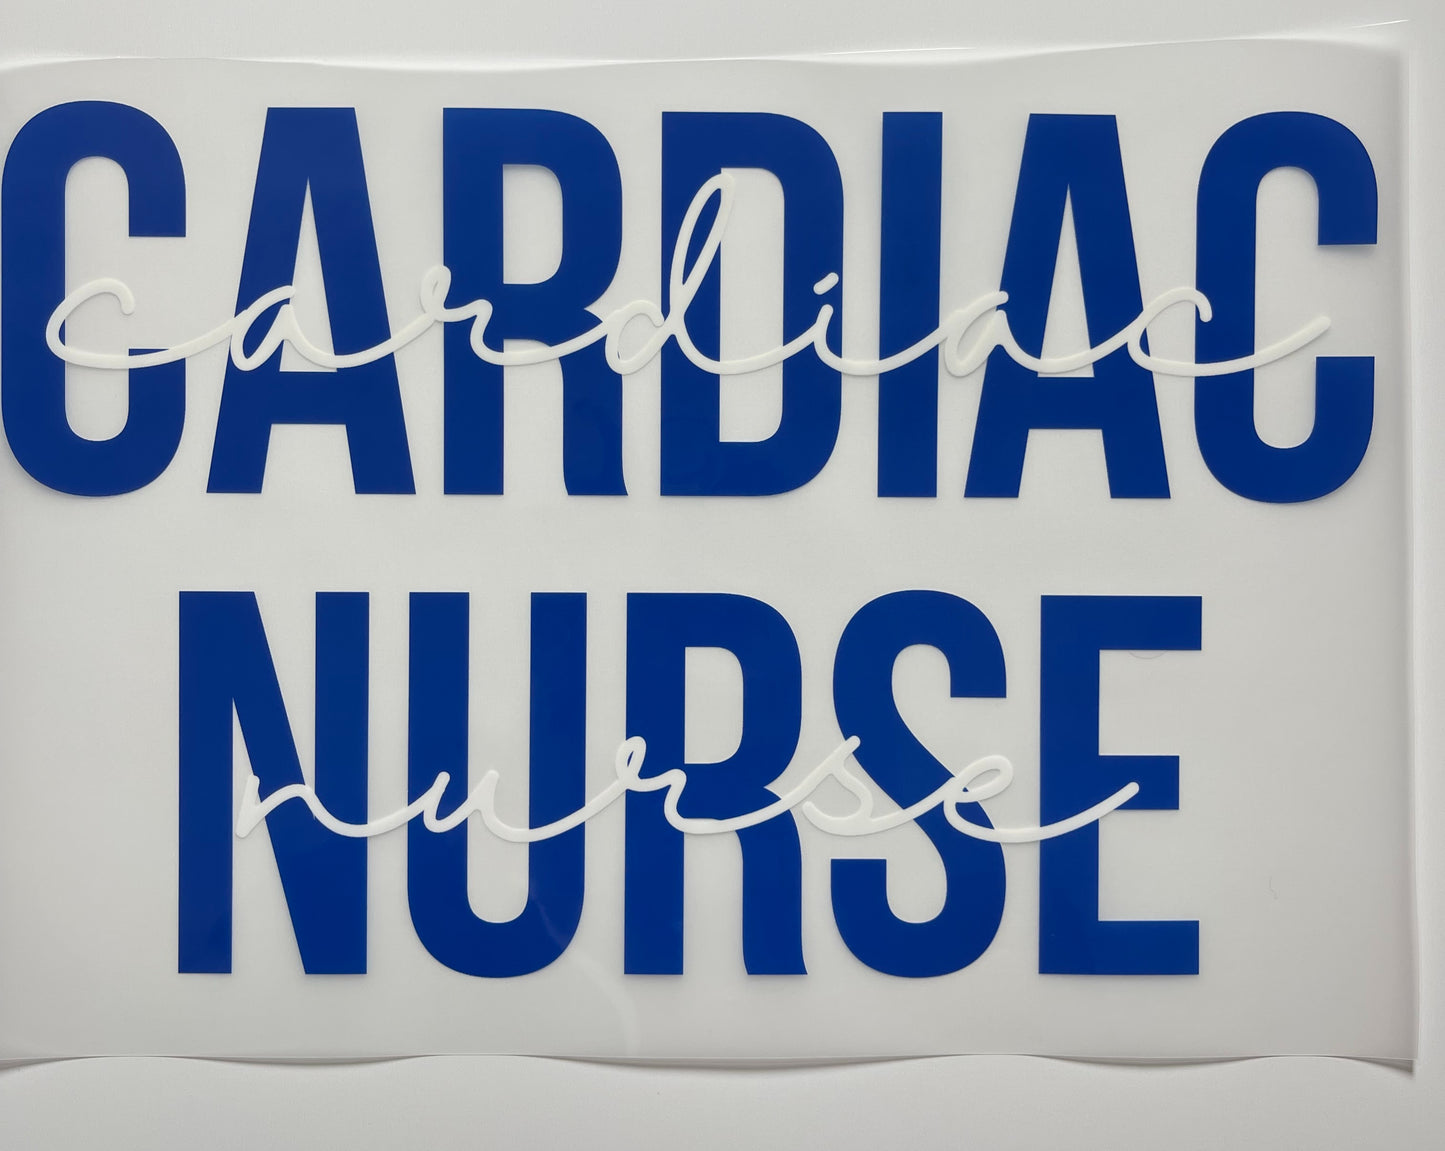 T-2 Cardiac Nurse